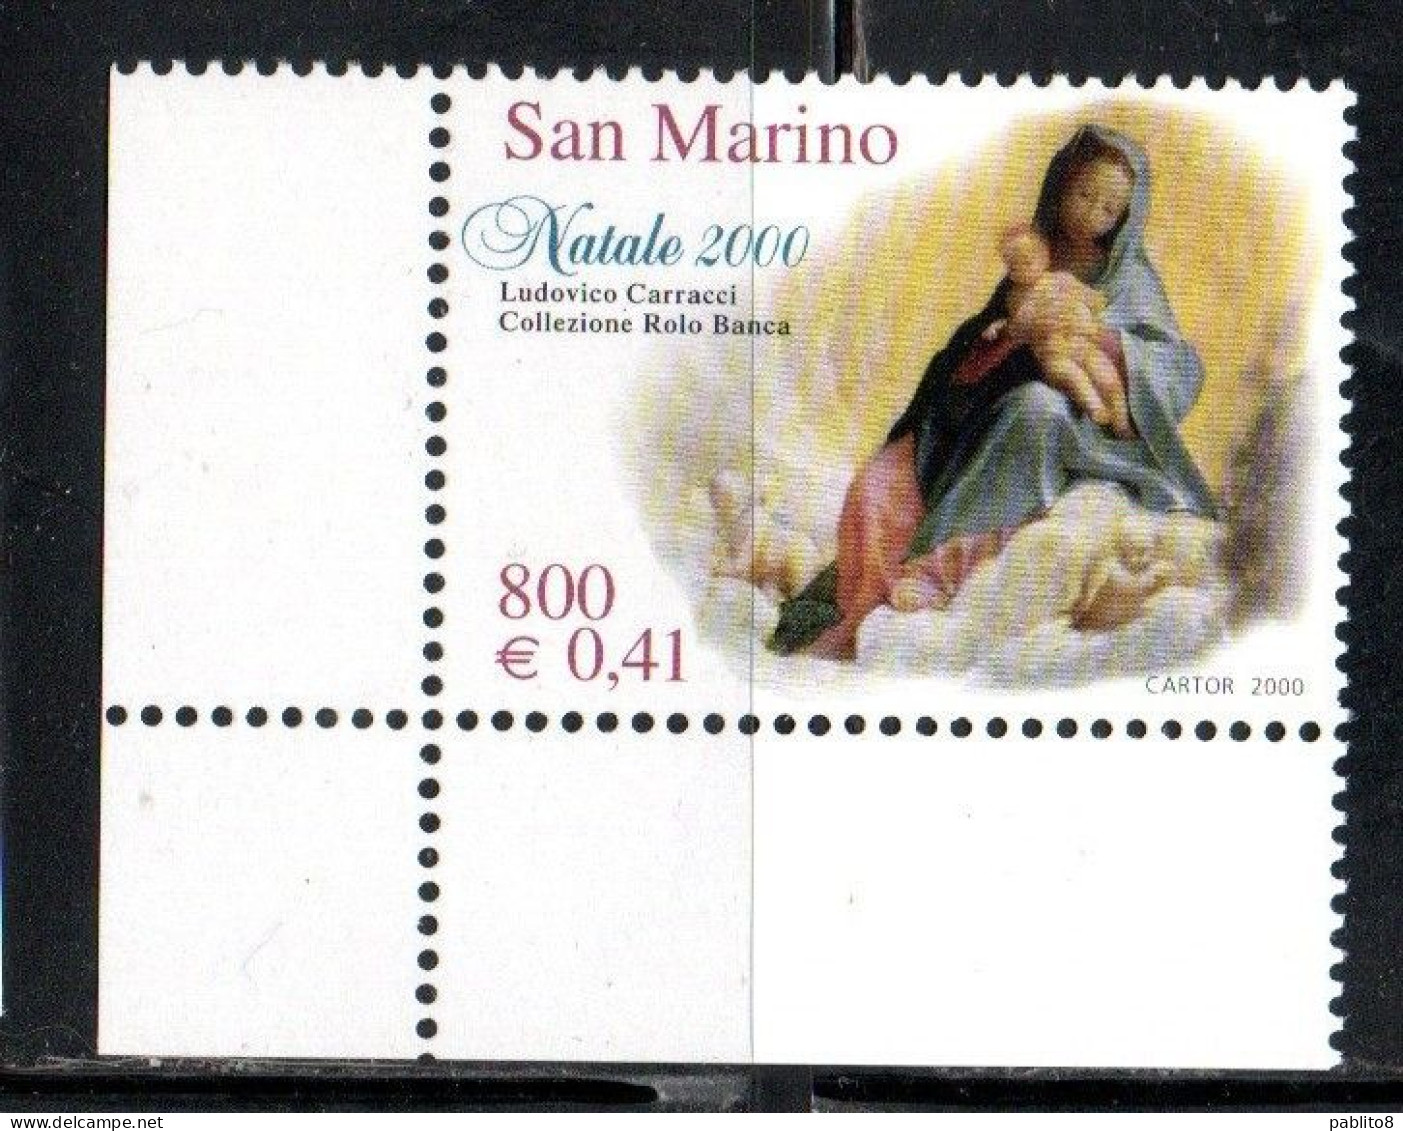 REPUBBLICA DI SAN MARINO 2000 NATALE CHRISTMAS NOEL WEIHNACHTEN NATAL NAVIDAD LIRE 800 € 0,41 MNH - Ongebruikt